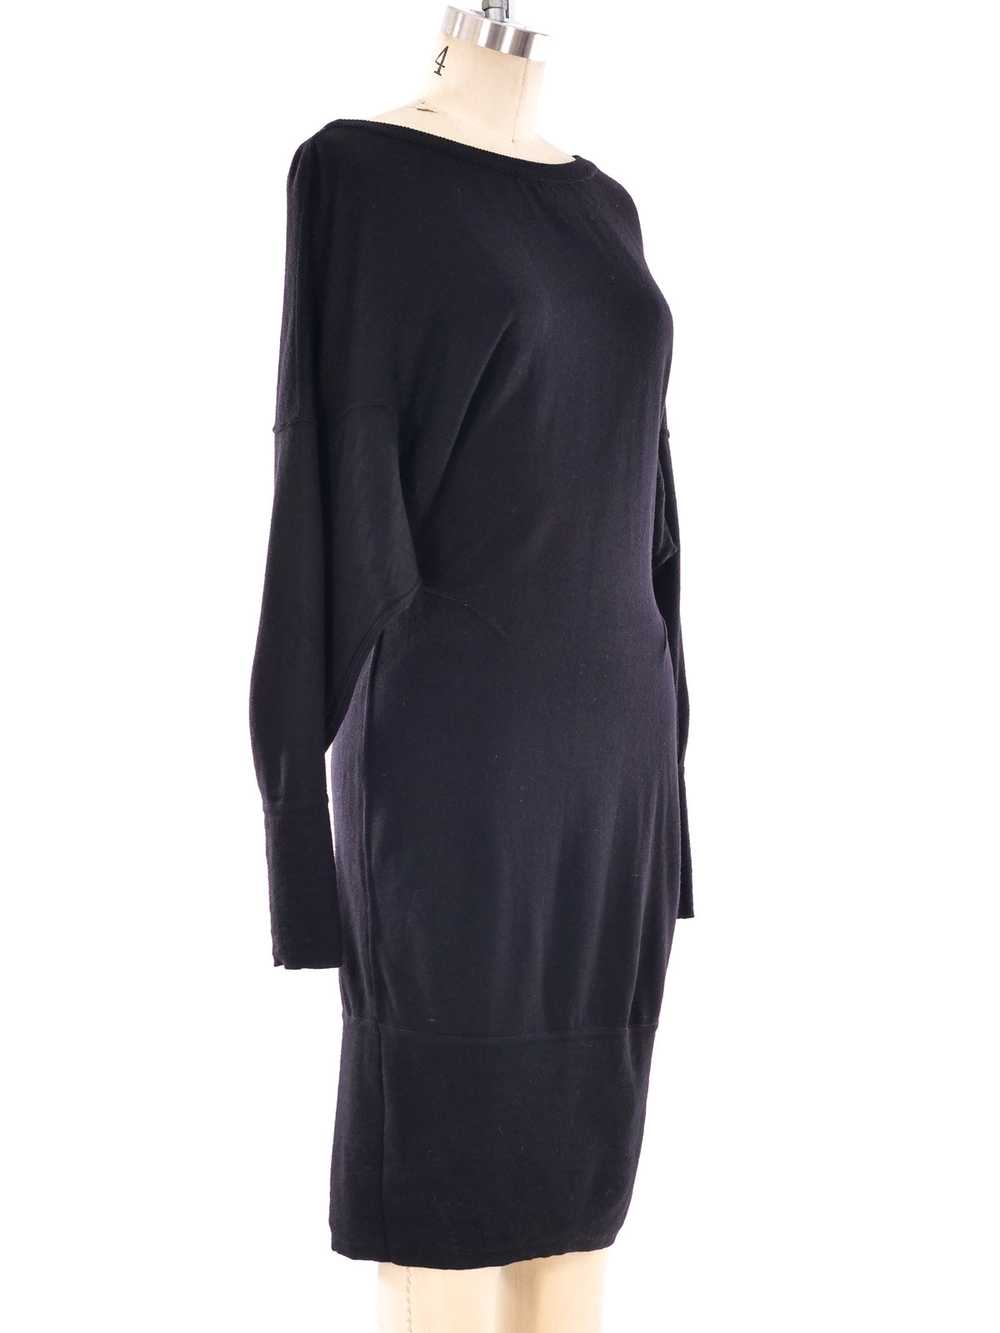 Alaia Knit Sweater Dress - image 2